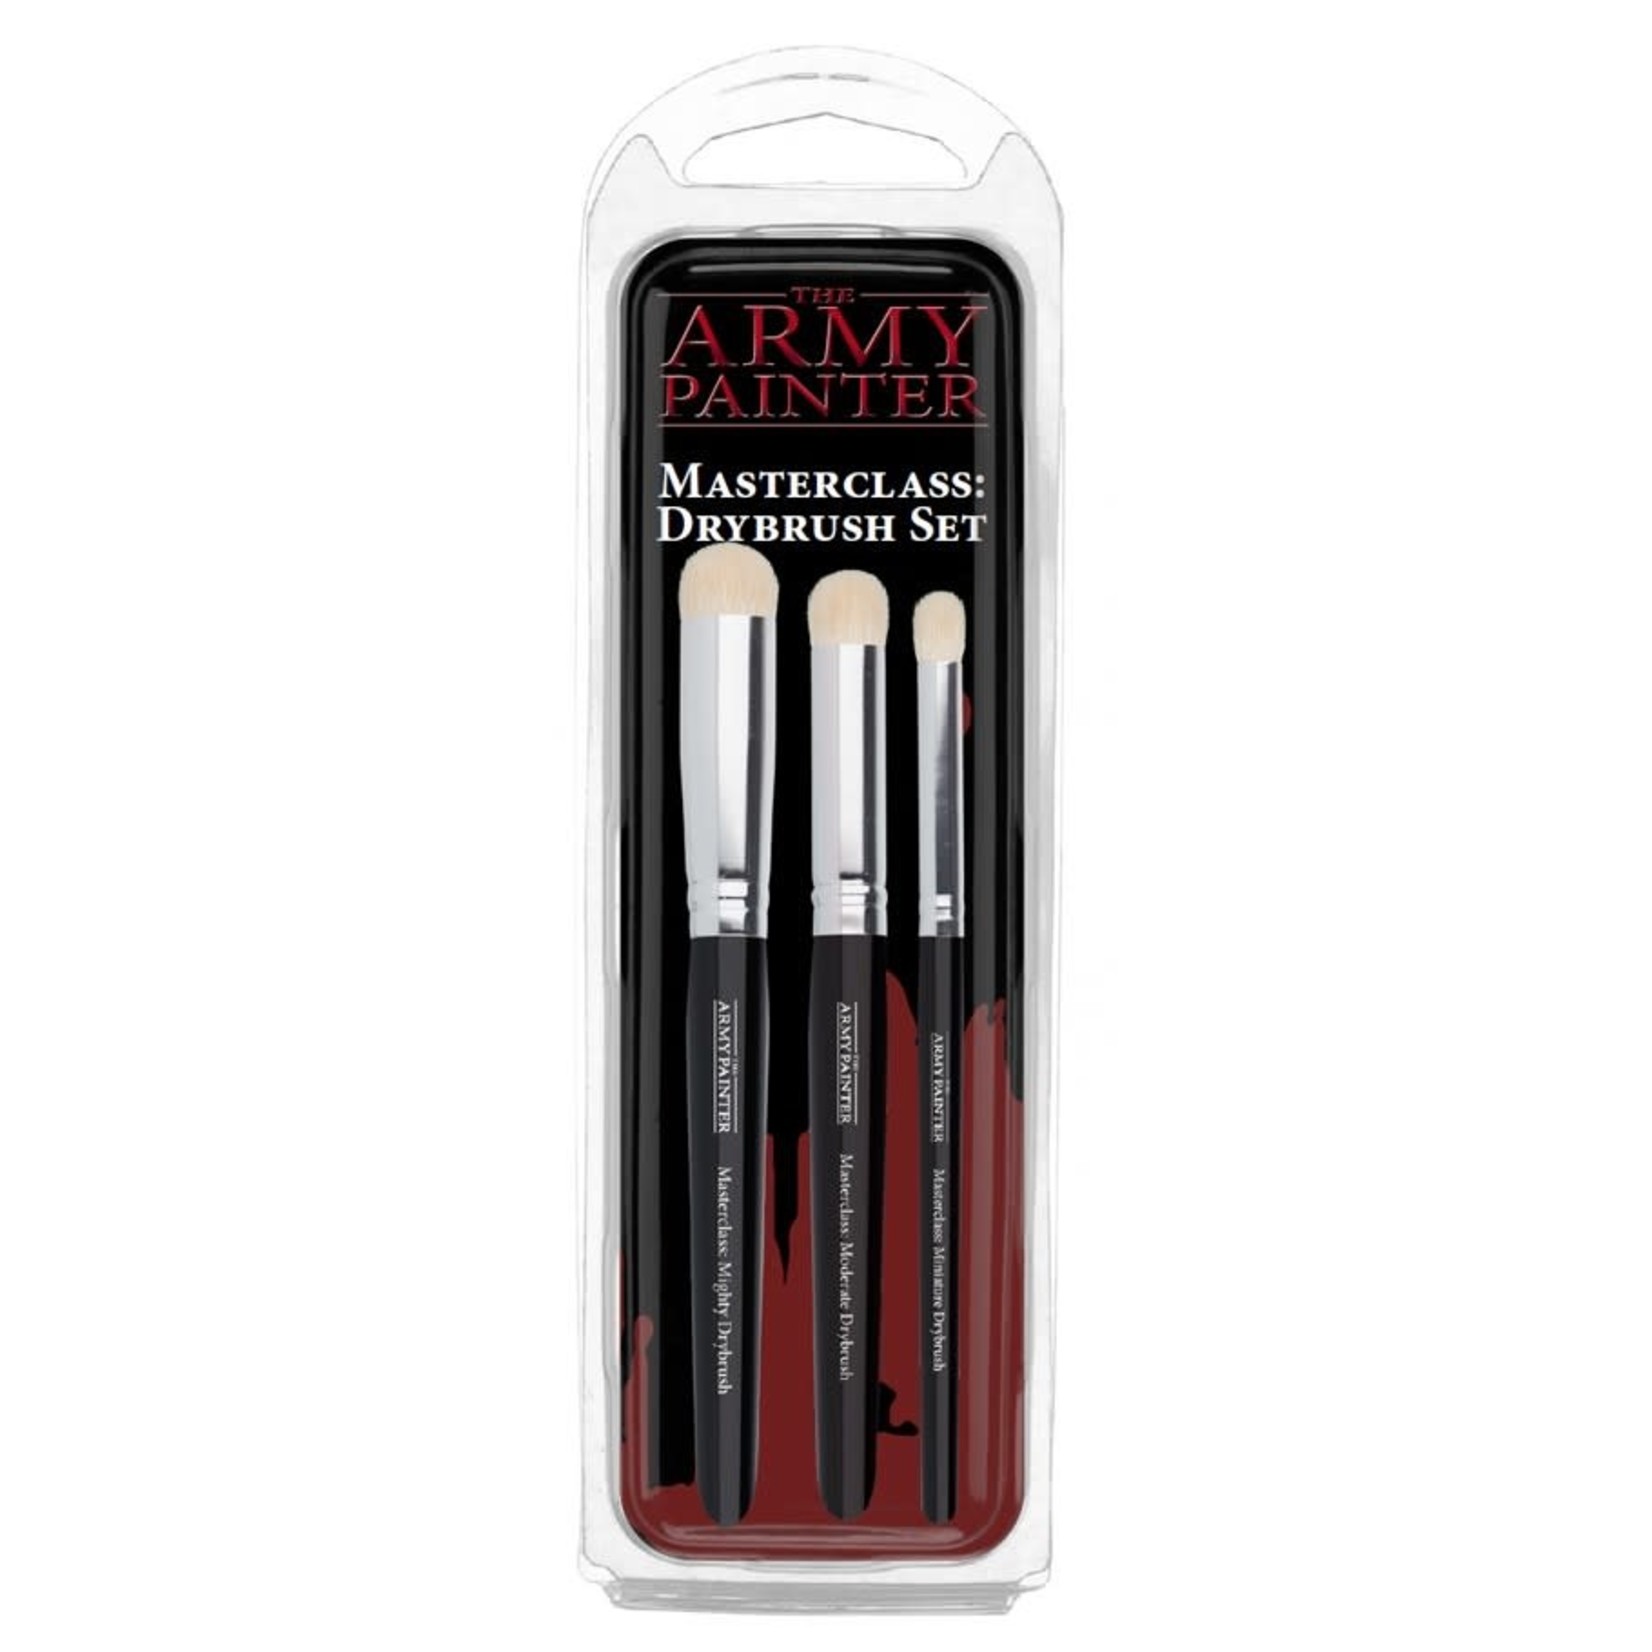 The Army Painter 5054 Masterclass: Drybrush Set